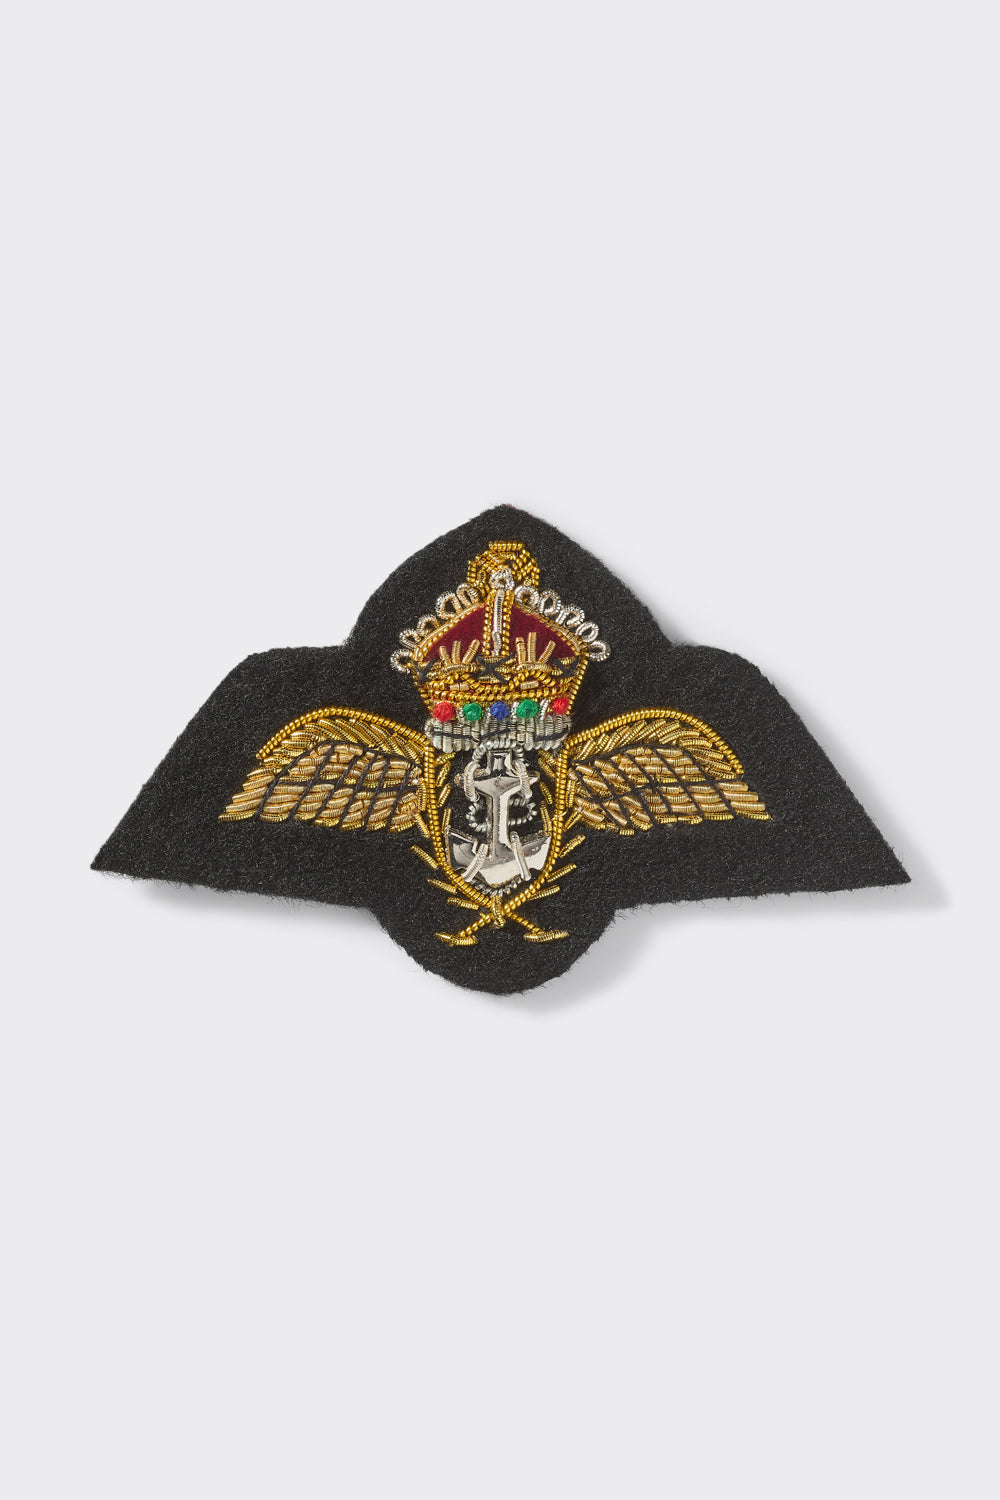 Fleet Air Arm Tudor Crown Embroidered Badge - Small